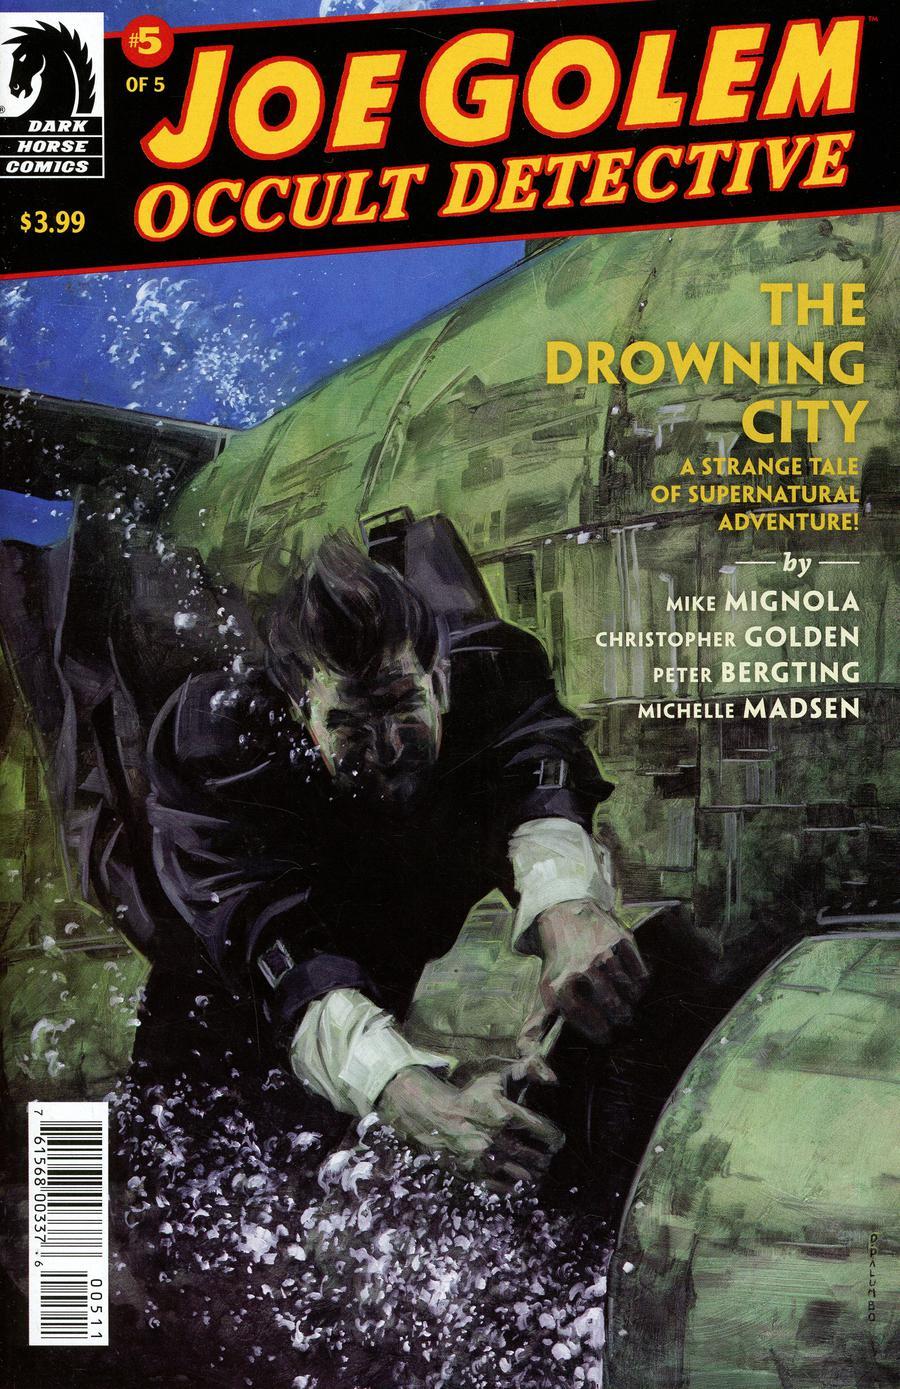 Joe Golem Occult Detective Drowning City Vol. 1 #5